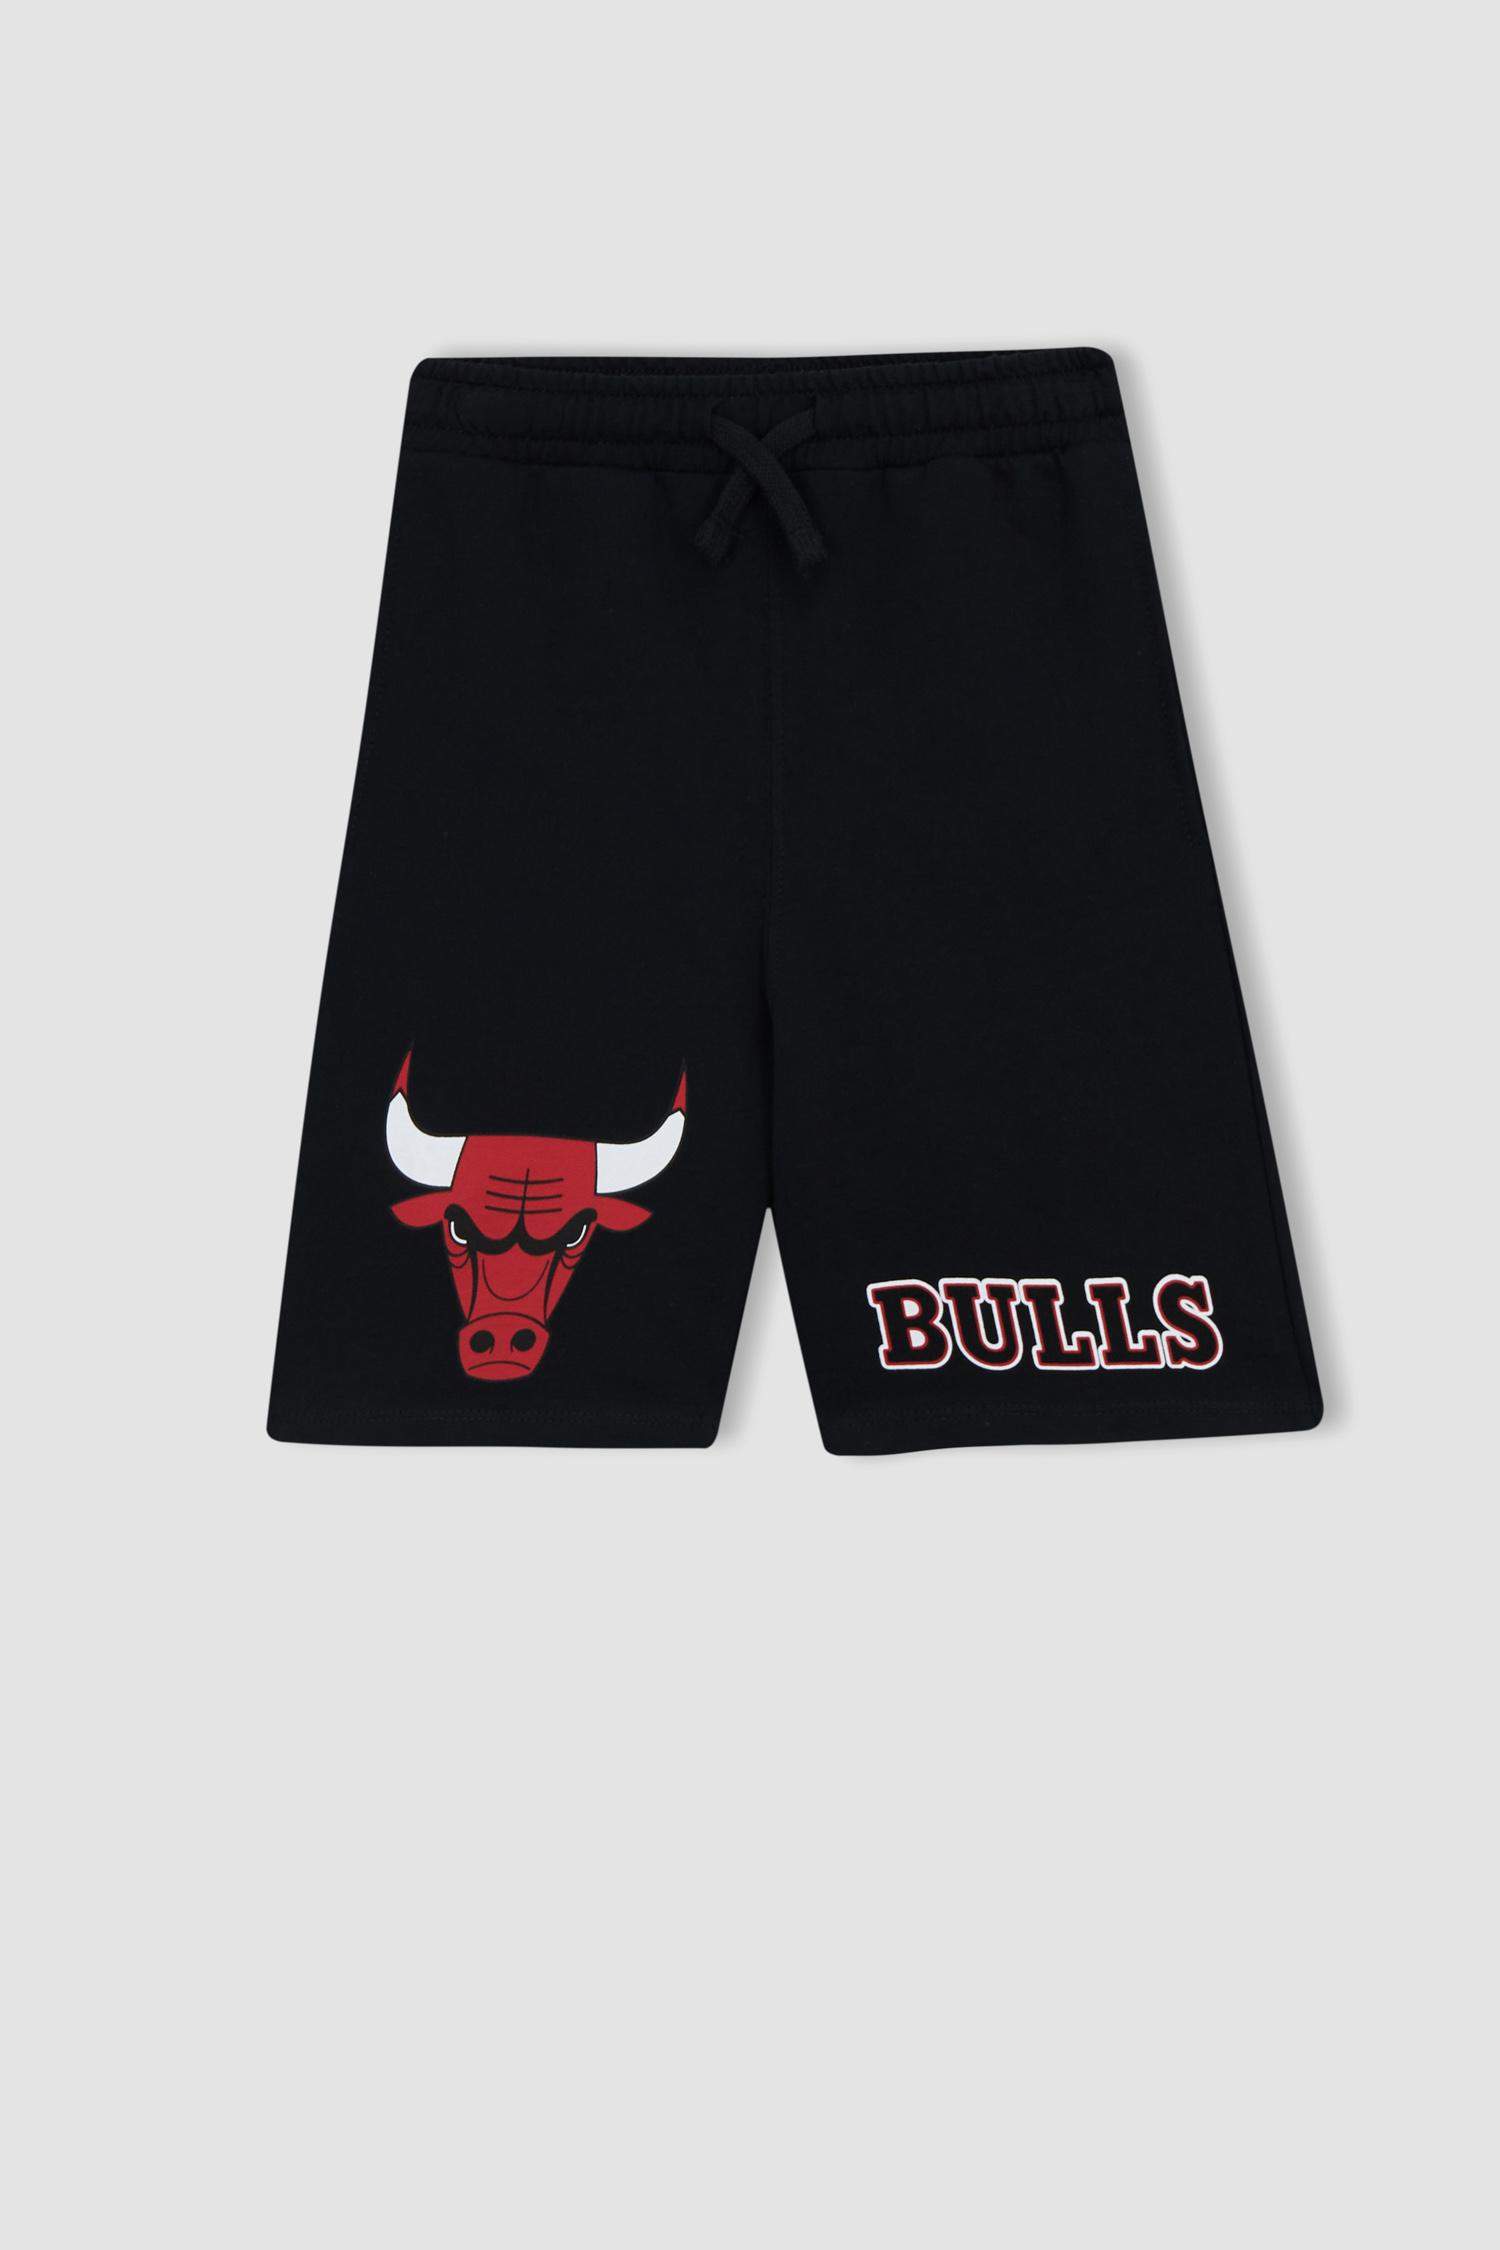 Chicago Bulls Basketball Shorts